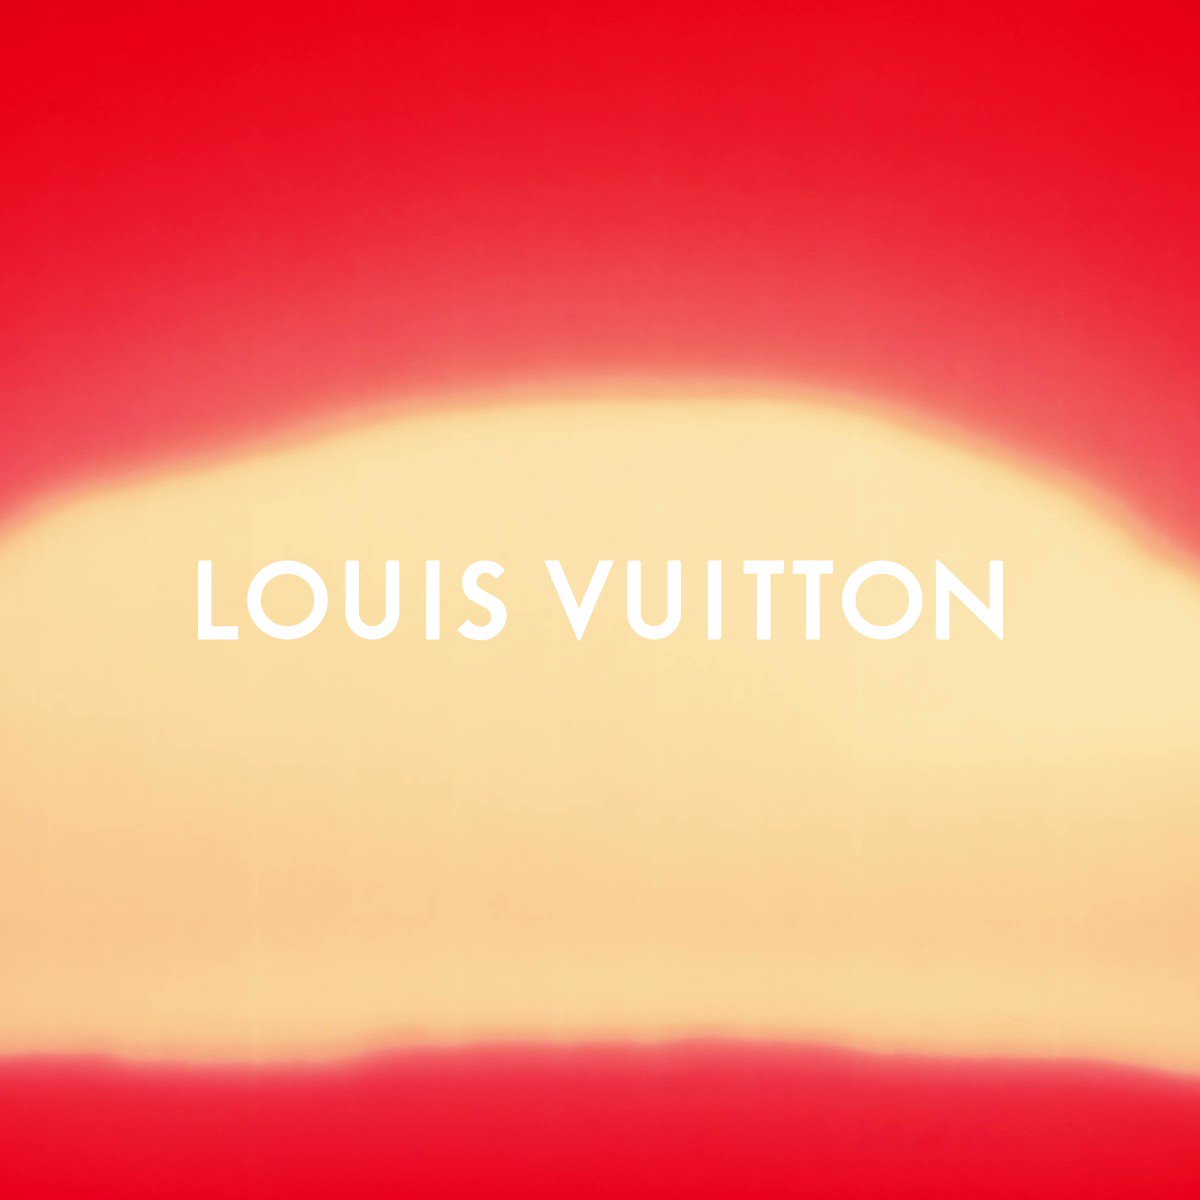 Louis Vuitton on X: Introducing #LouisVuitton's new sunglasses